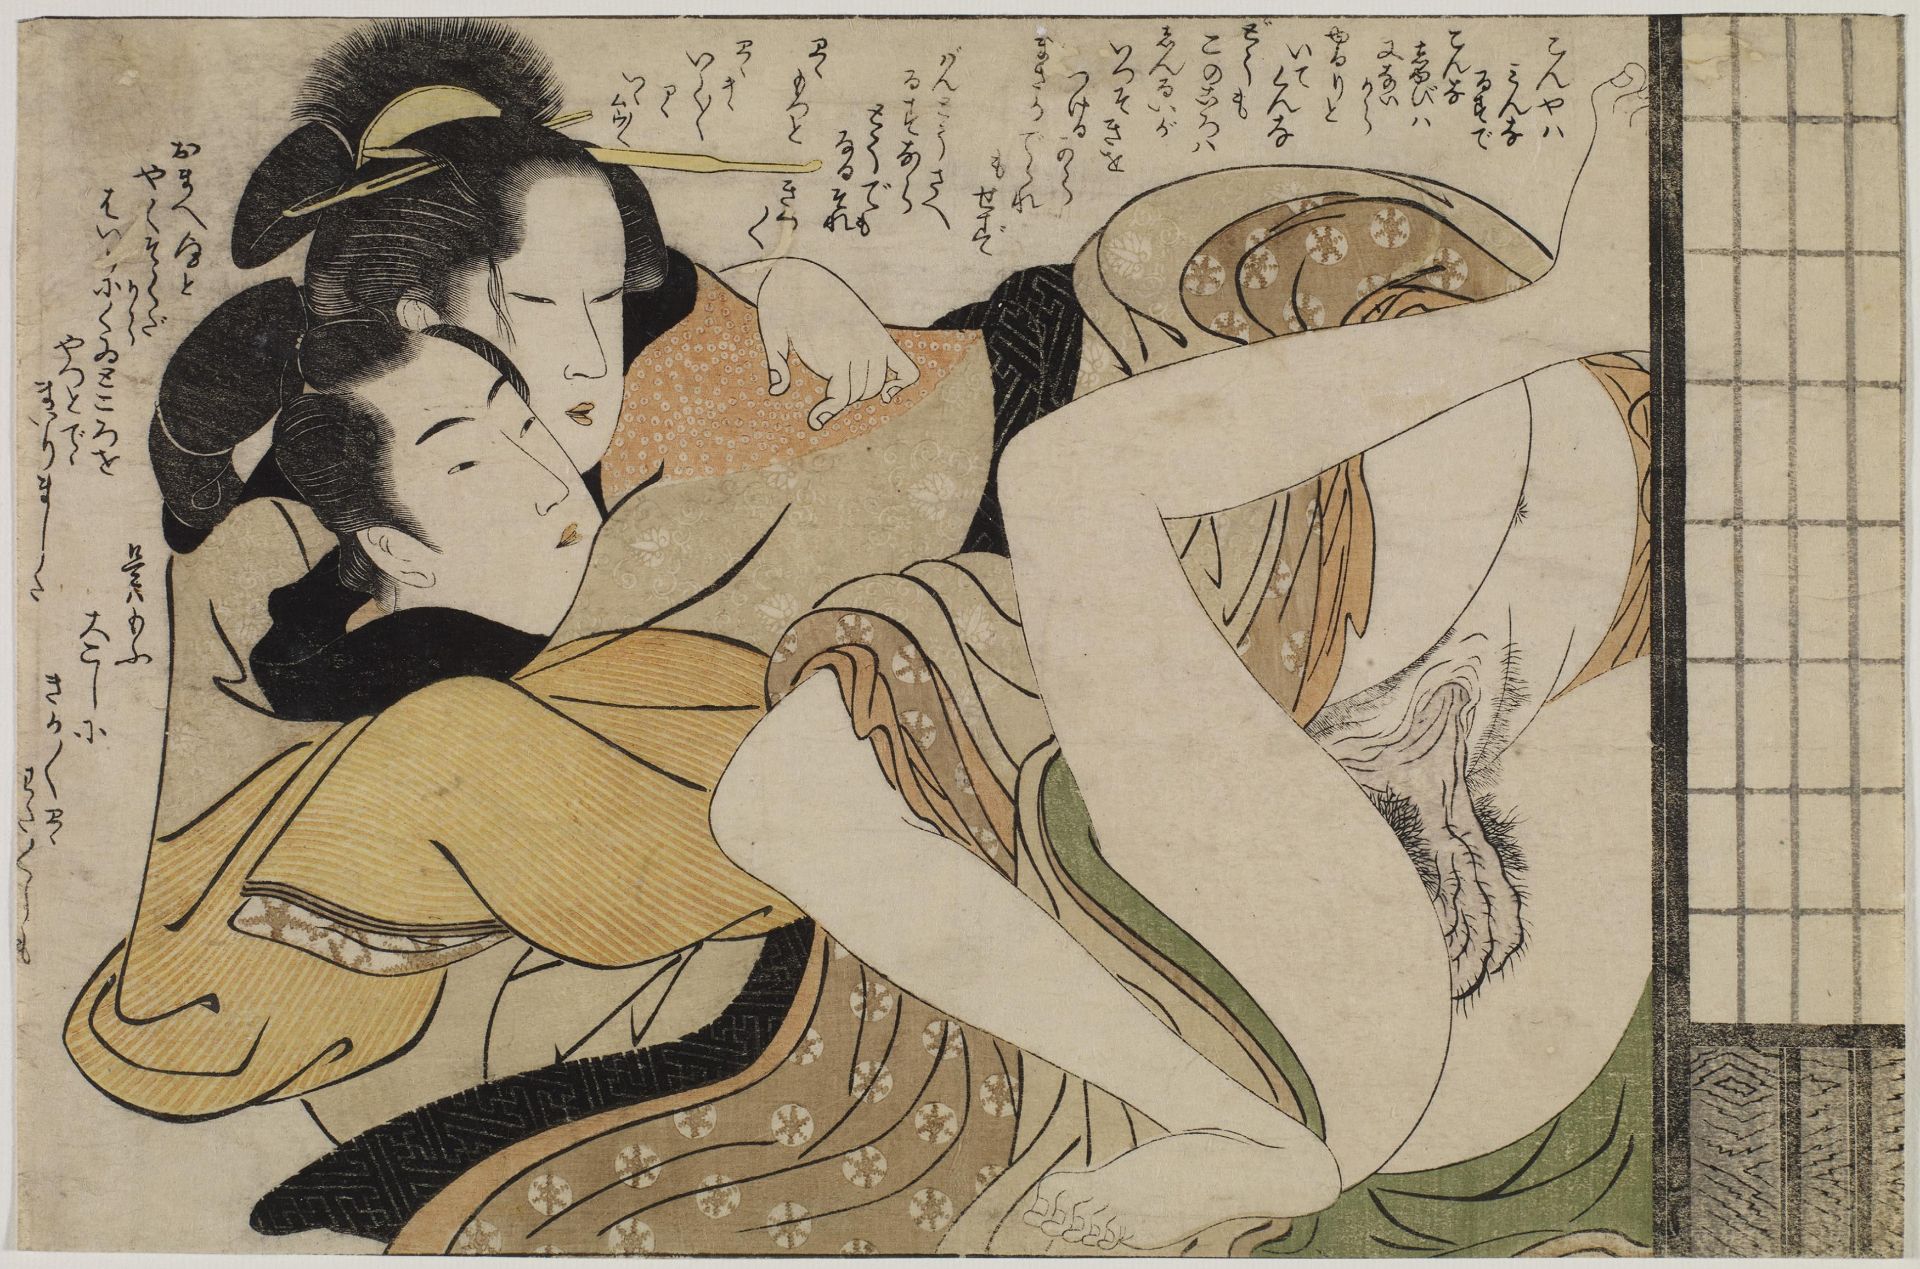 13 Blätter der Shunga-Serie "Fumi no kiyogaki" - Image 20 of 27